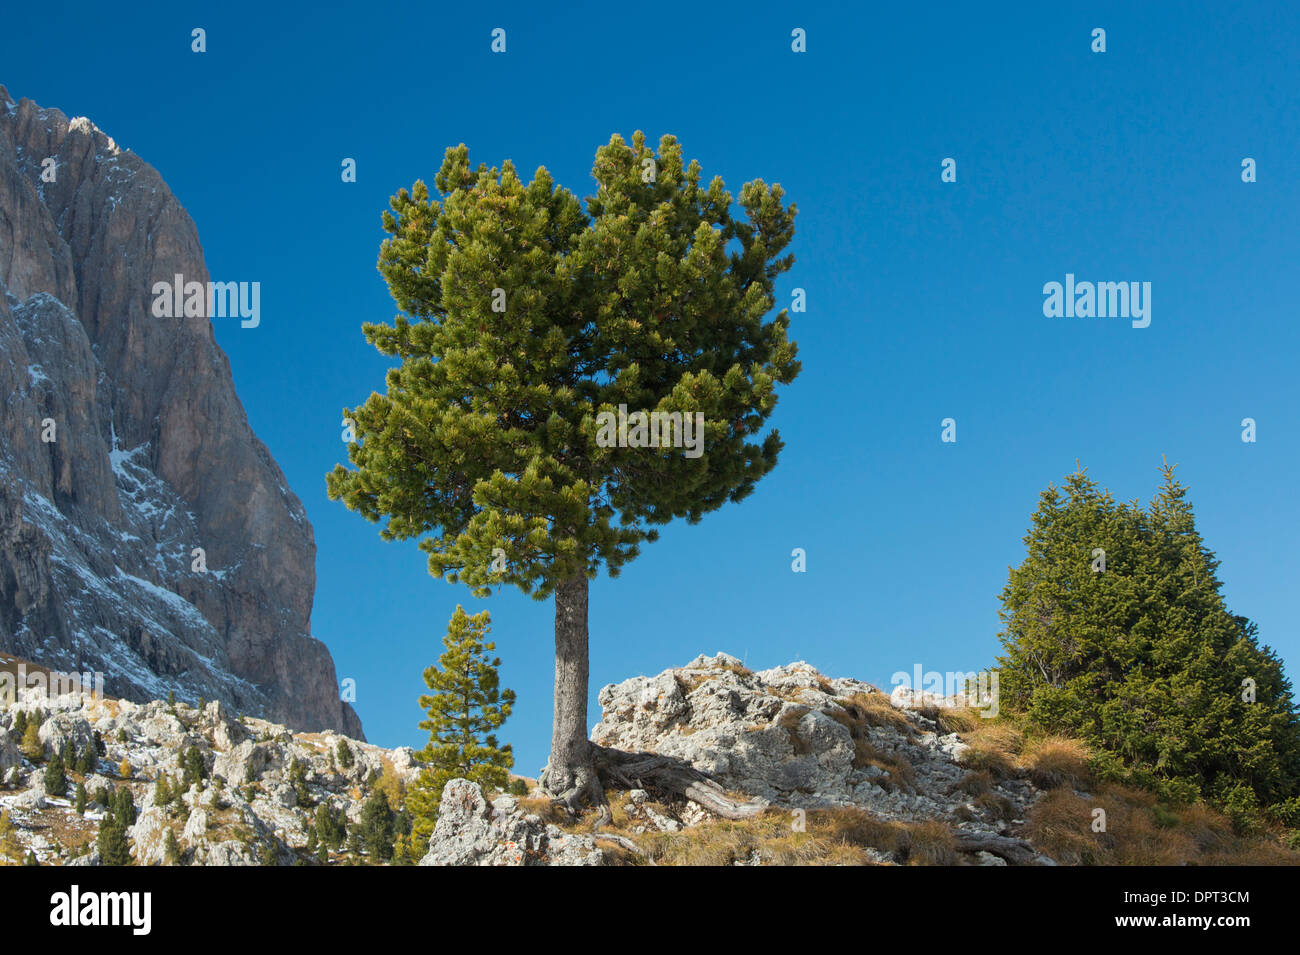 Swiss pine, Swiss stone pine, Arolla pine, Pinus cembra, Dolomites, north Italy. Stock Photo